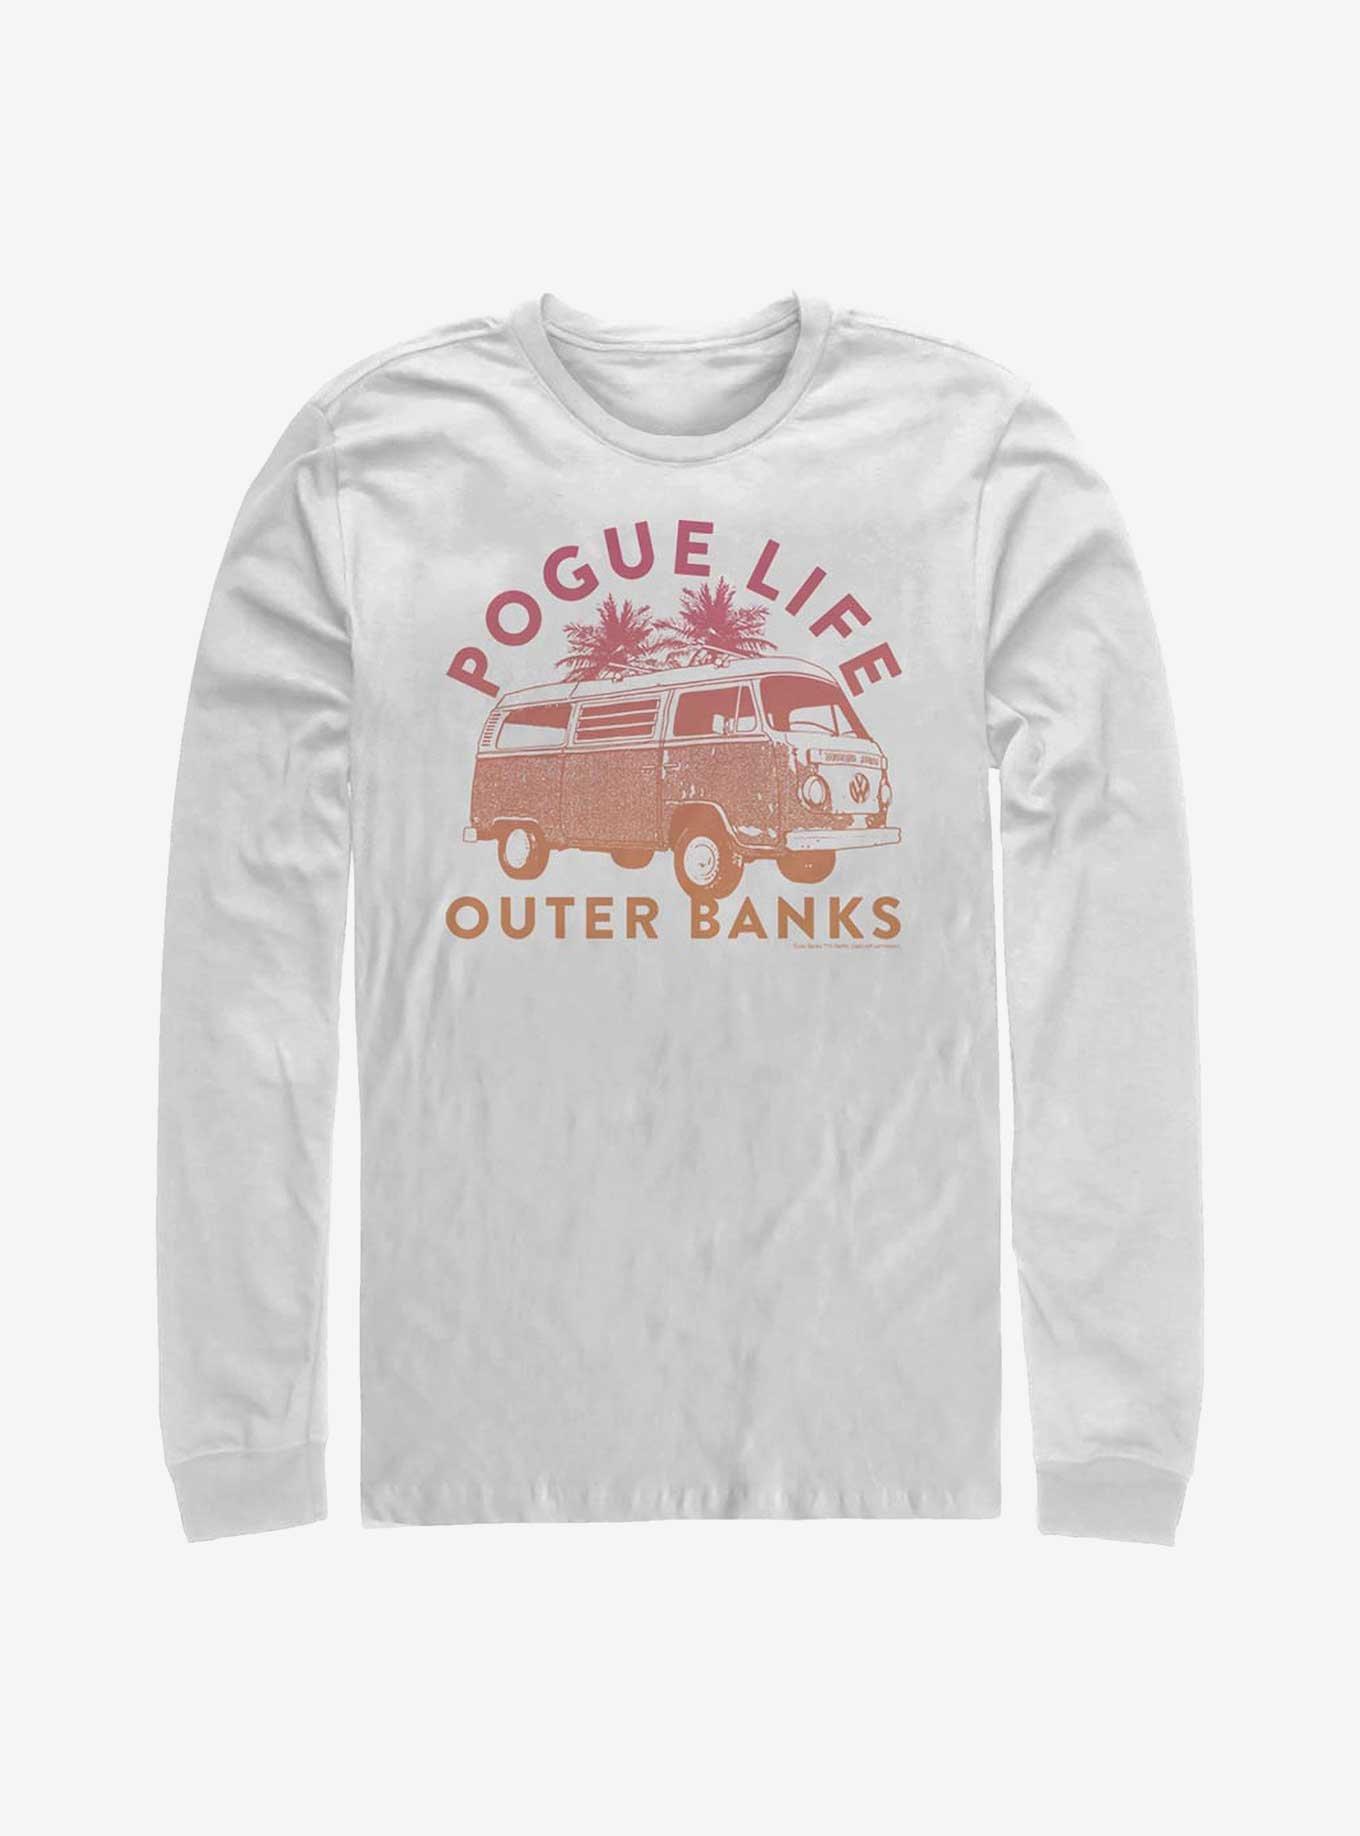 Outer Banks Pogue Life Long-Sleeve T-Shirt, WHITE, hi-res